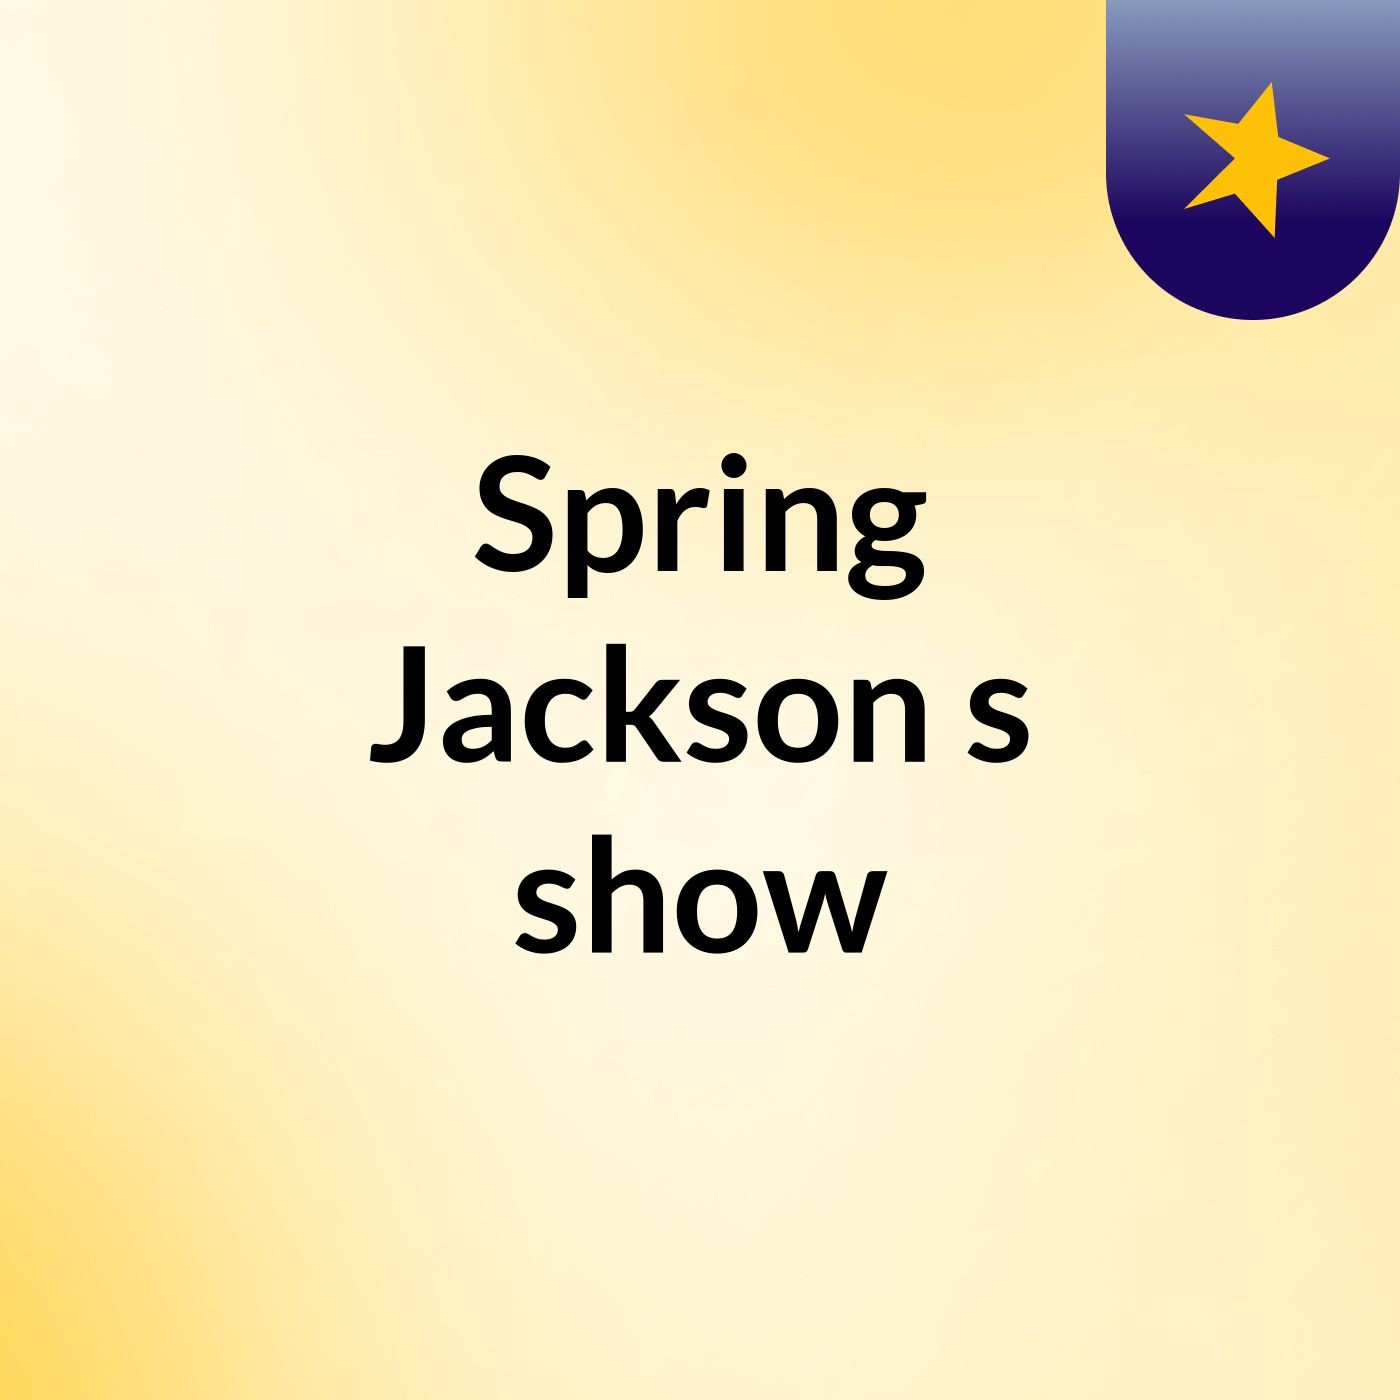 Spring Jackson's show